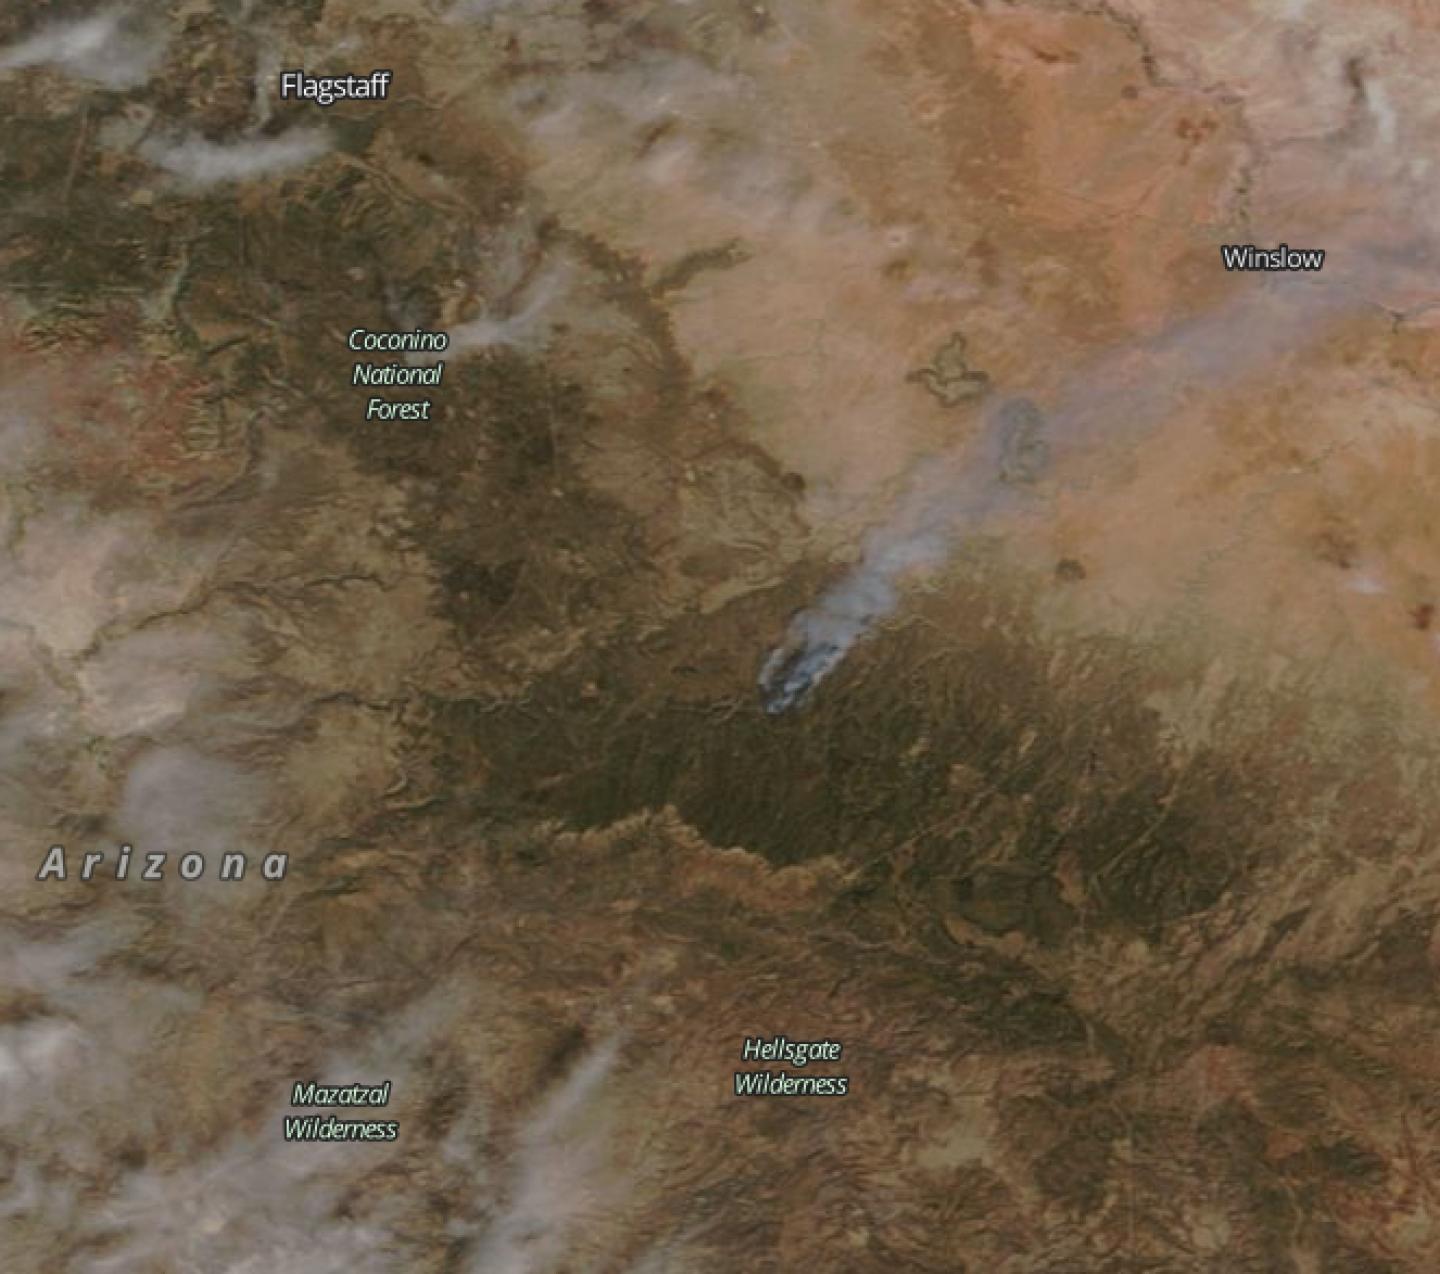 NASA's Terra Satellite Spots Arizona's Tinder Fire